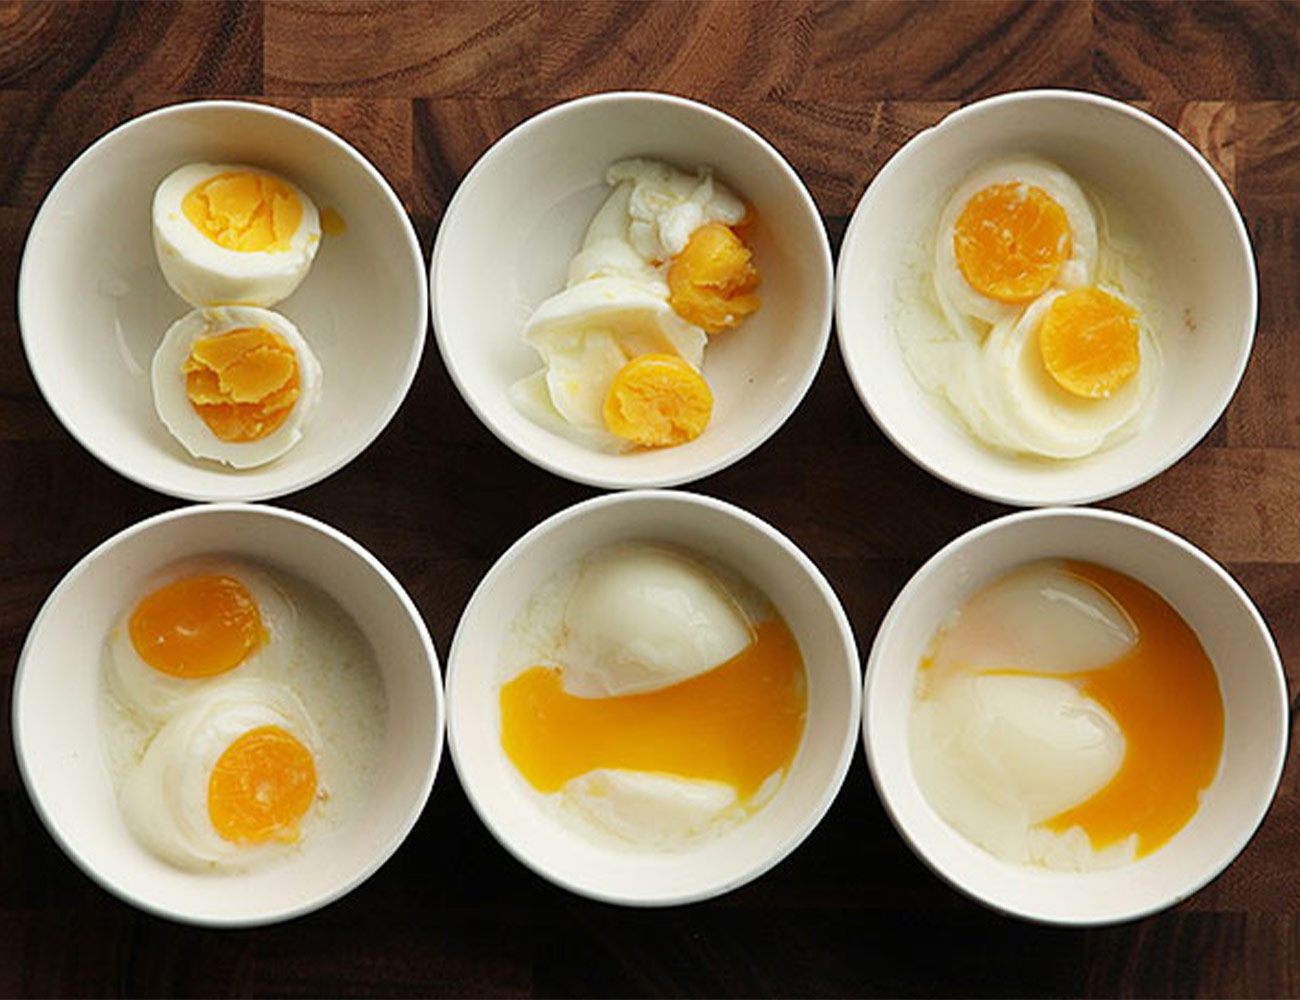 Степень варки яиц по минутам с фото